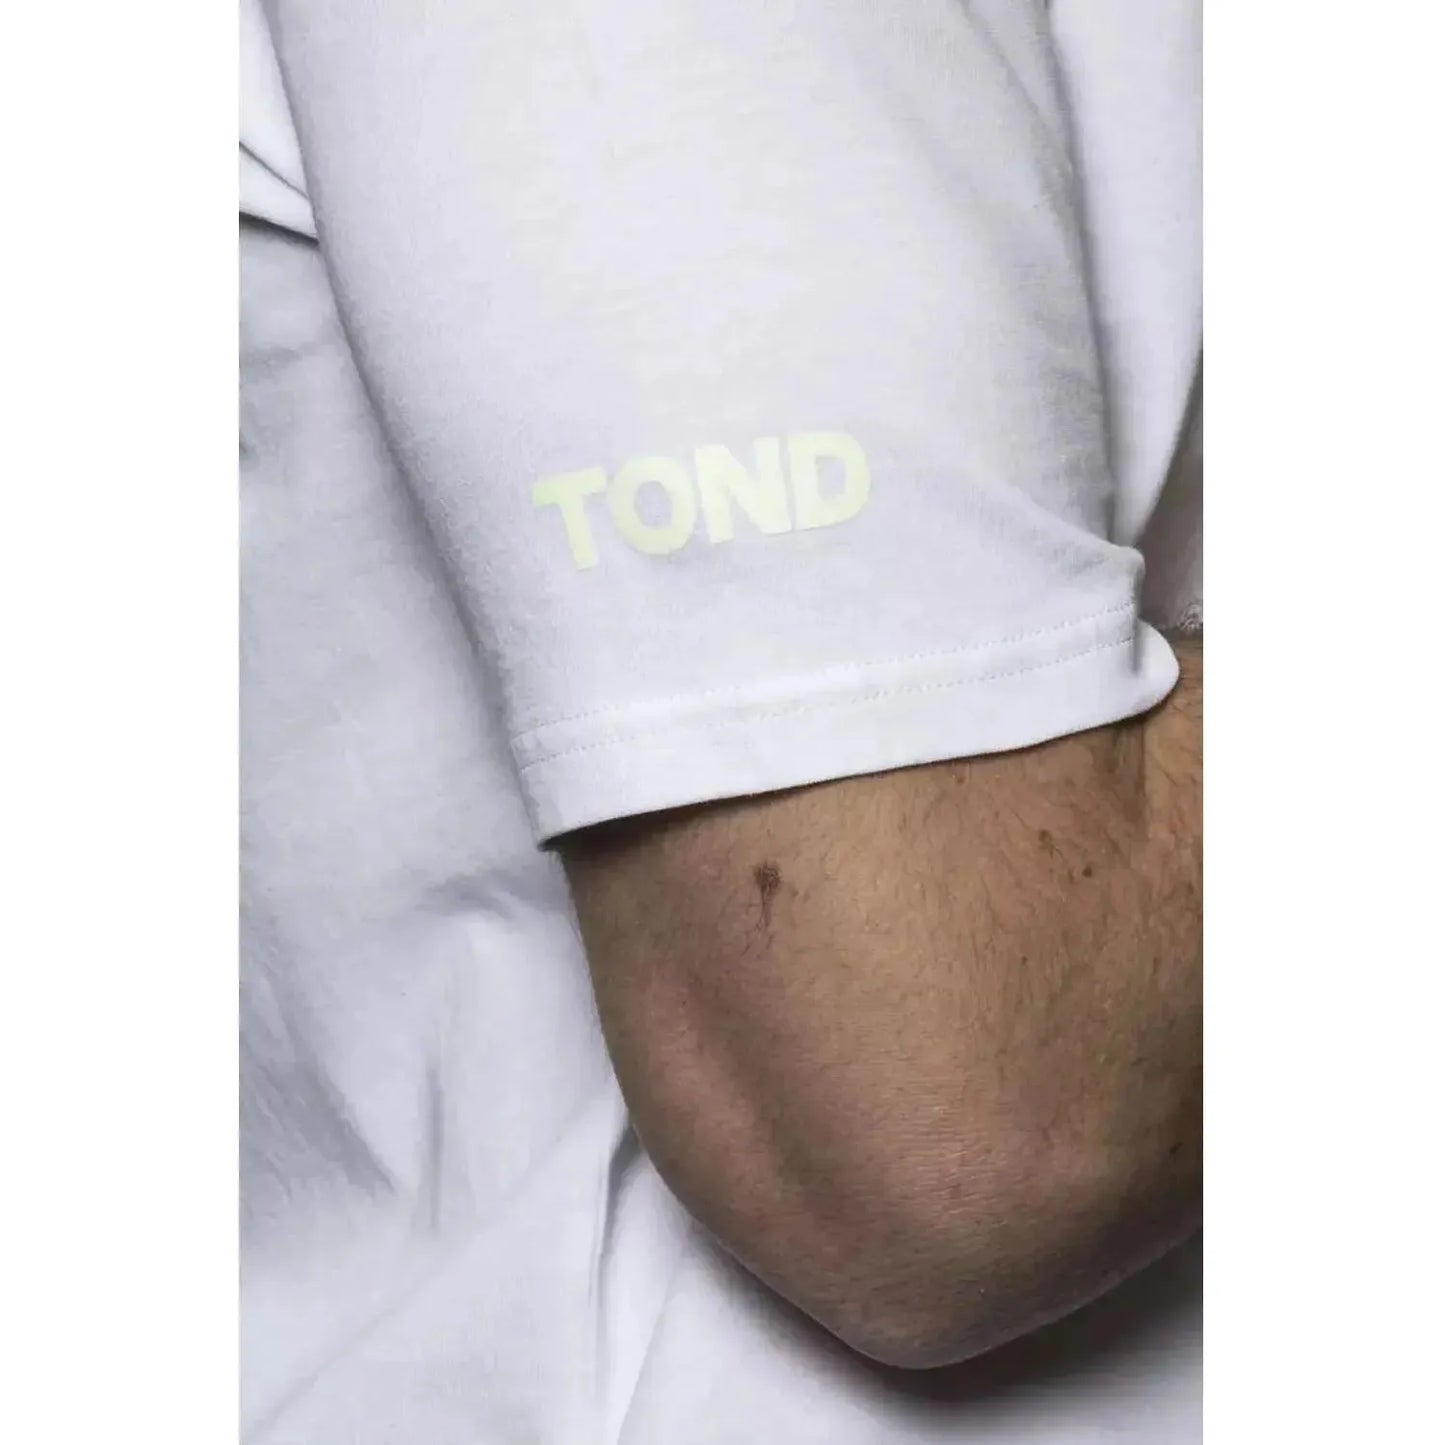 Tond Glow-In-The-Dark Oversized Cotton Tee MAN T-SHIRTS white-cotton-t-shirt-17